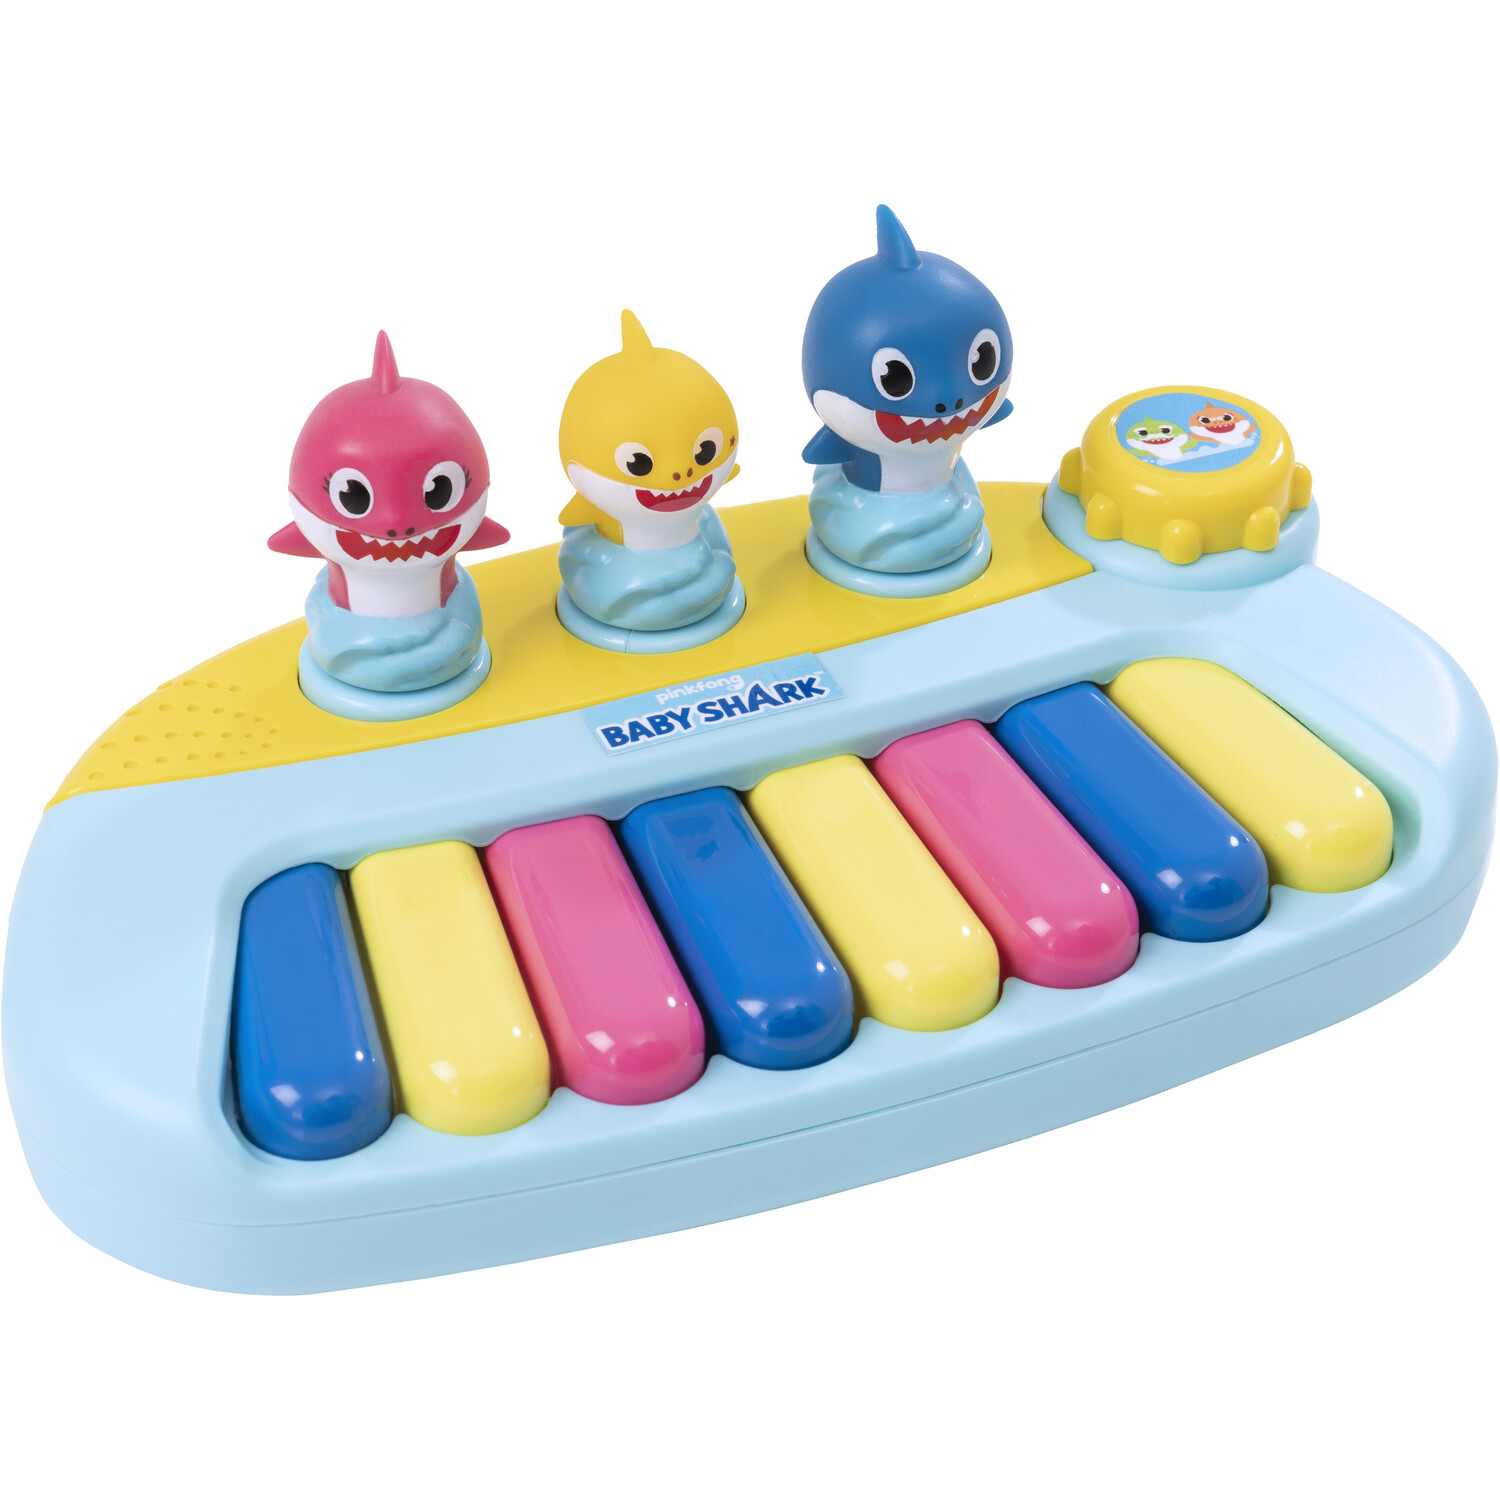 HTI Baby Shark Character Keyboard Musical Toy Image